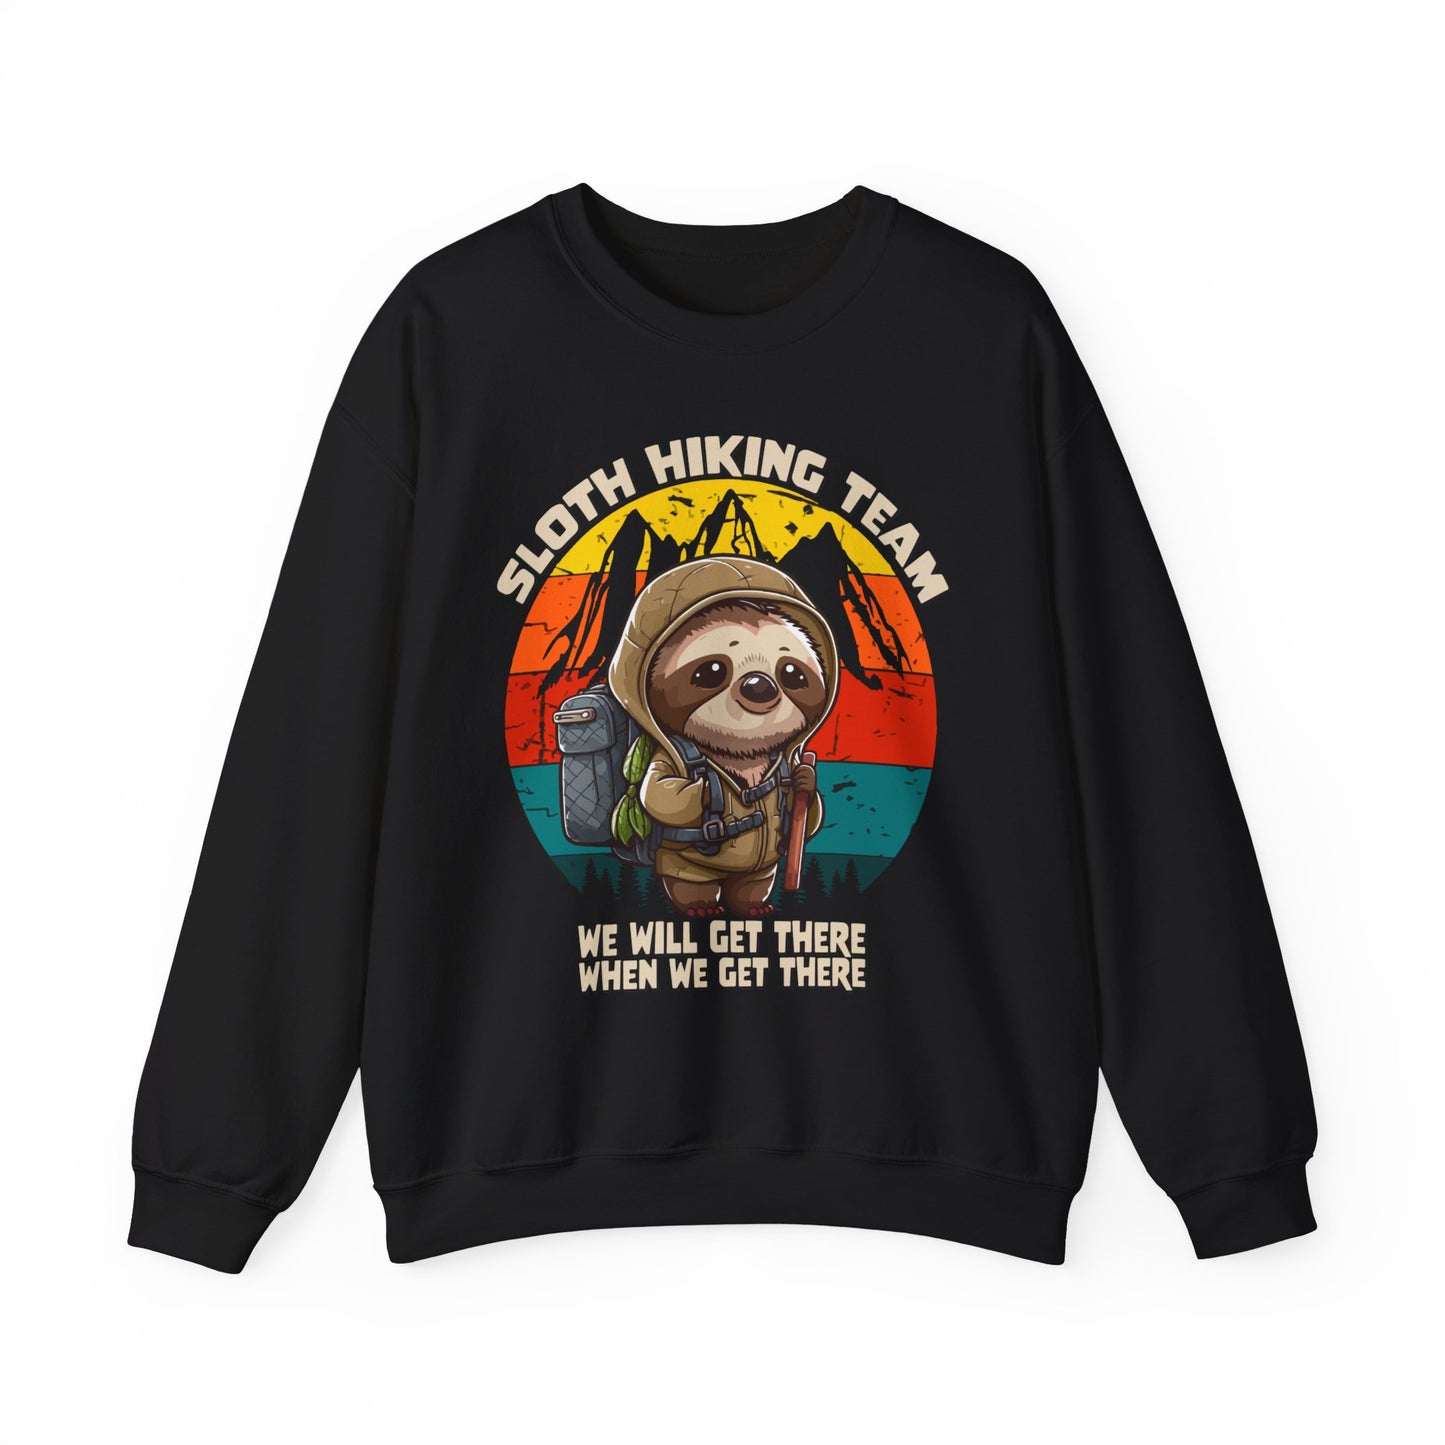 Sloth Hiking Team Sweatshirt, A Funny Sloth Sweatshirt